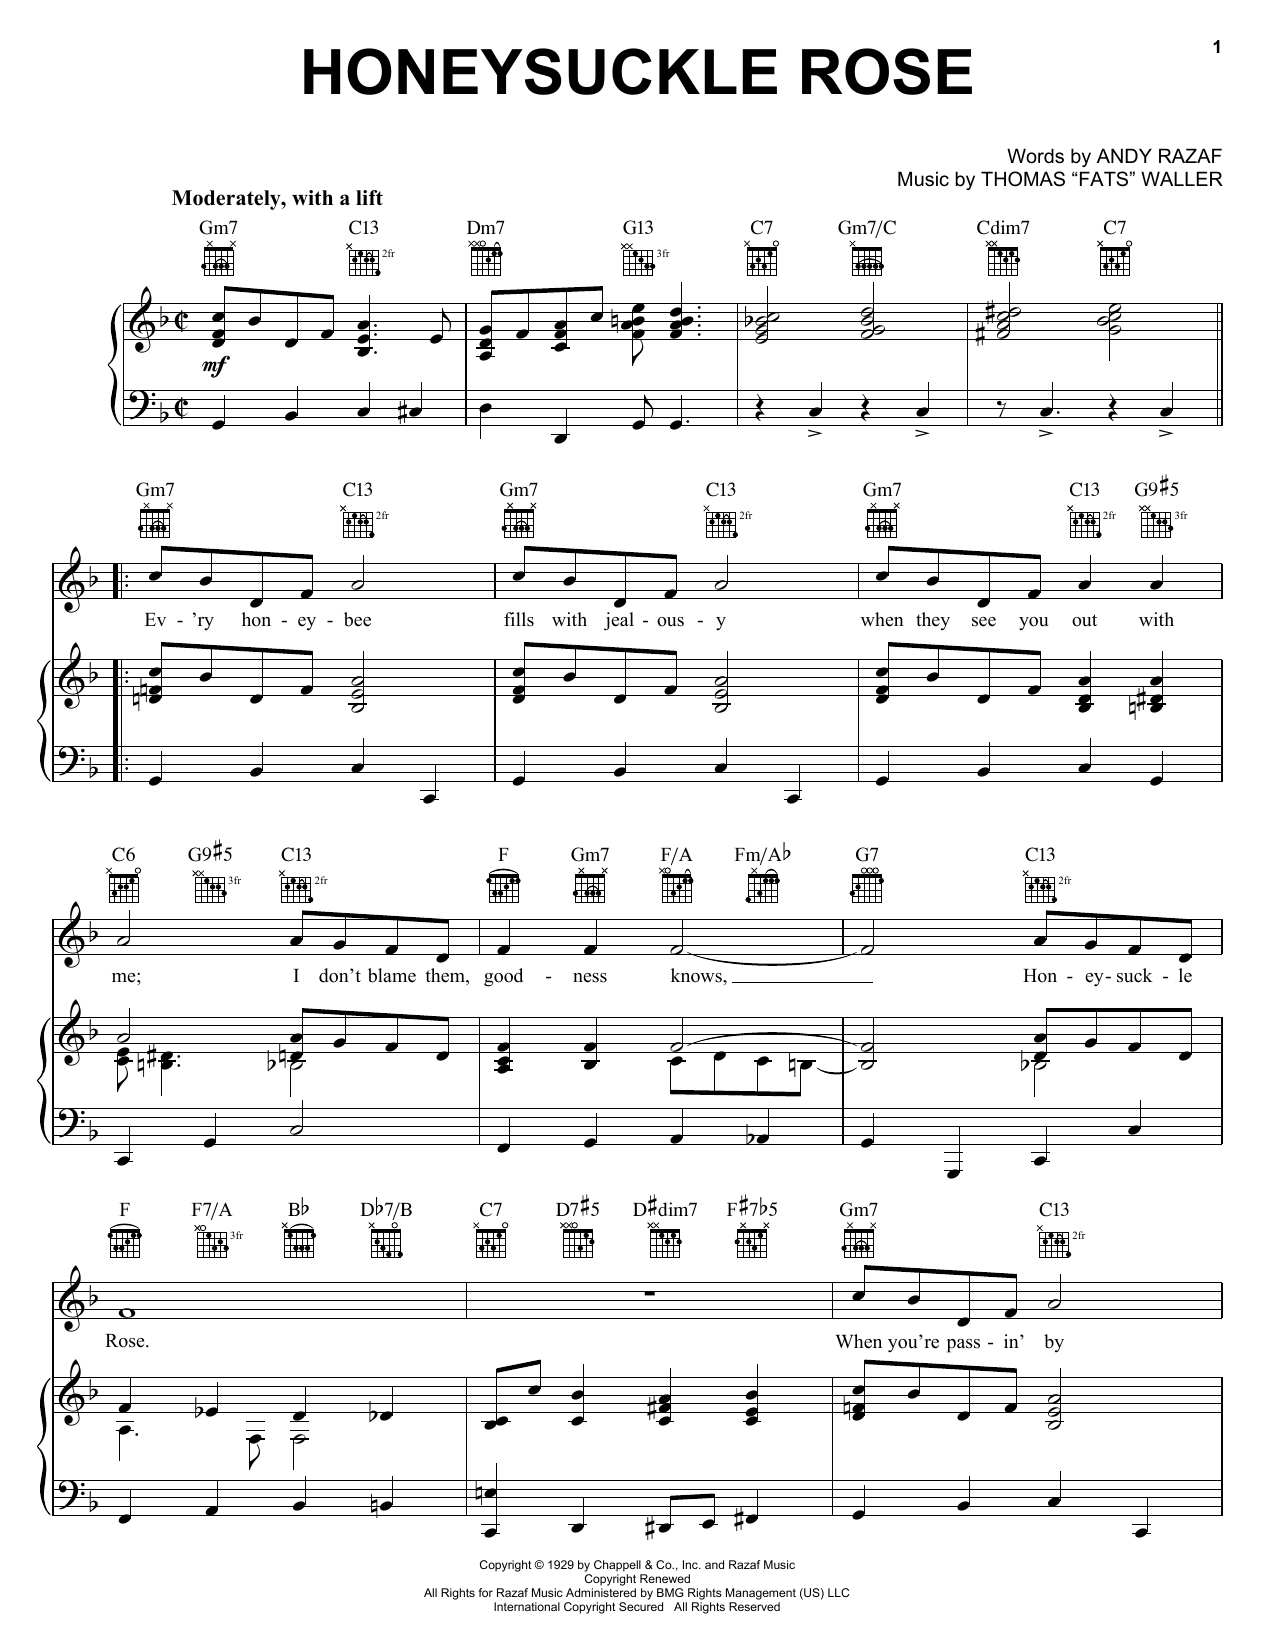 Django Reinhardt Honeysuckle Rose Sheet Music Notes & Chords for Guitar Tab - Download or Print PDF